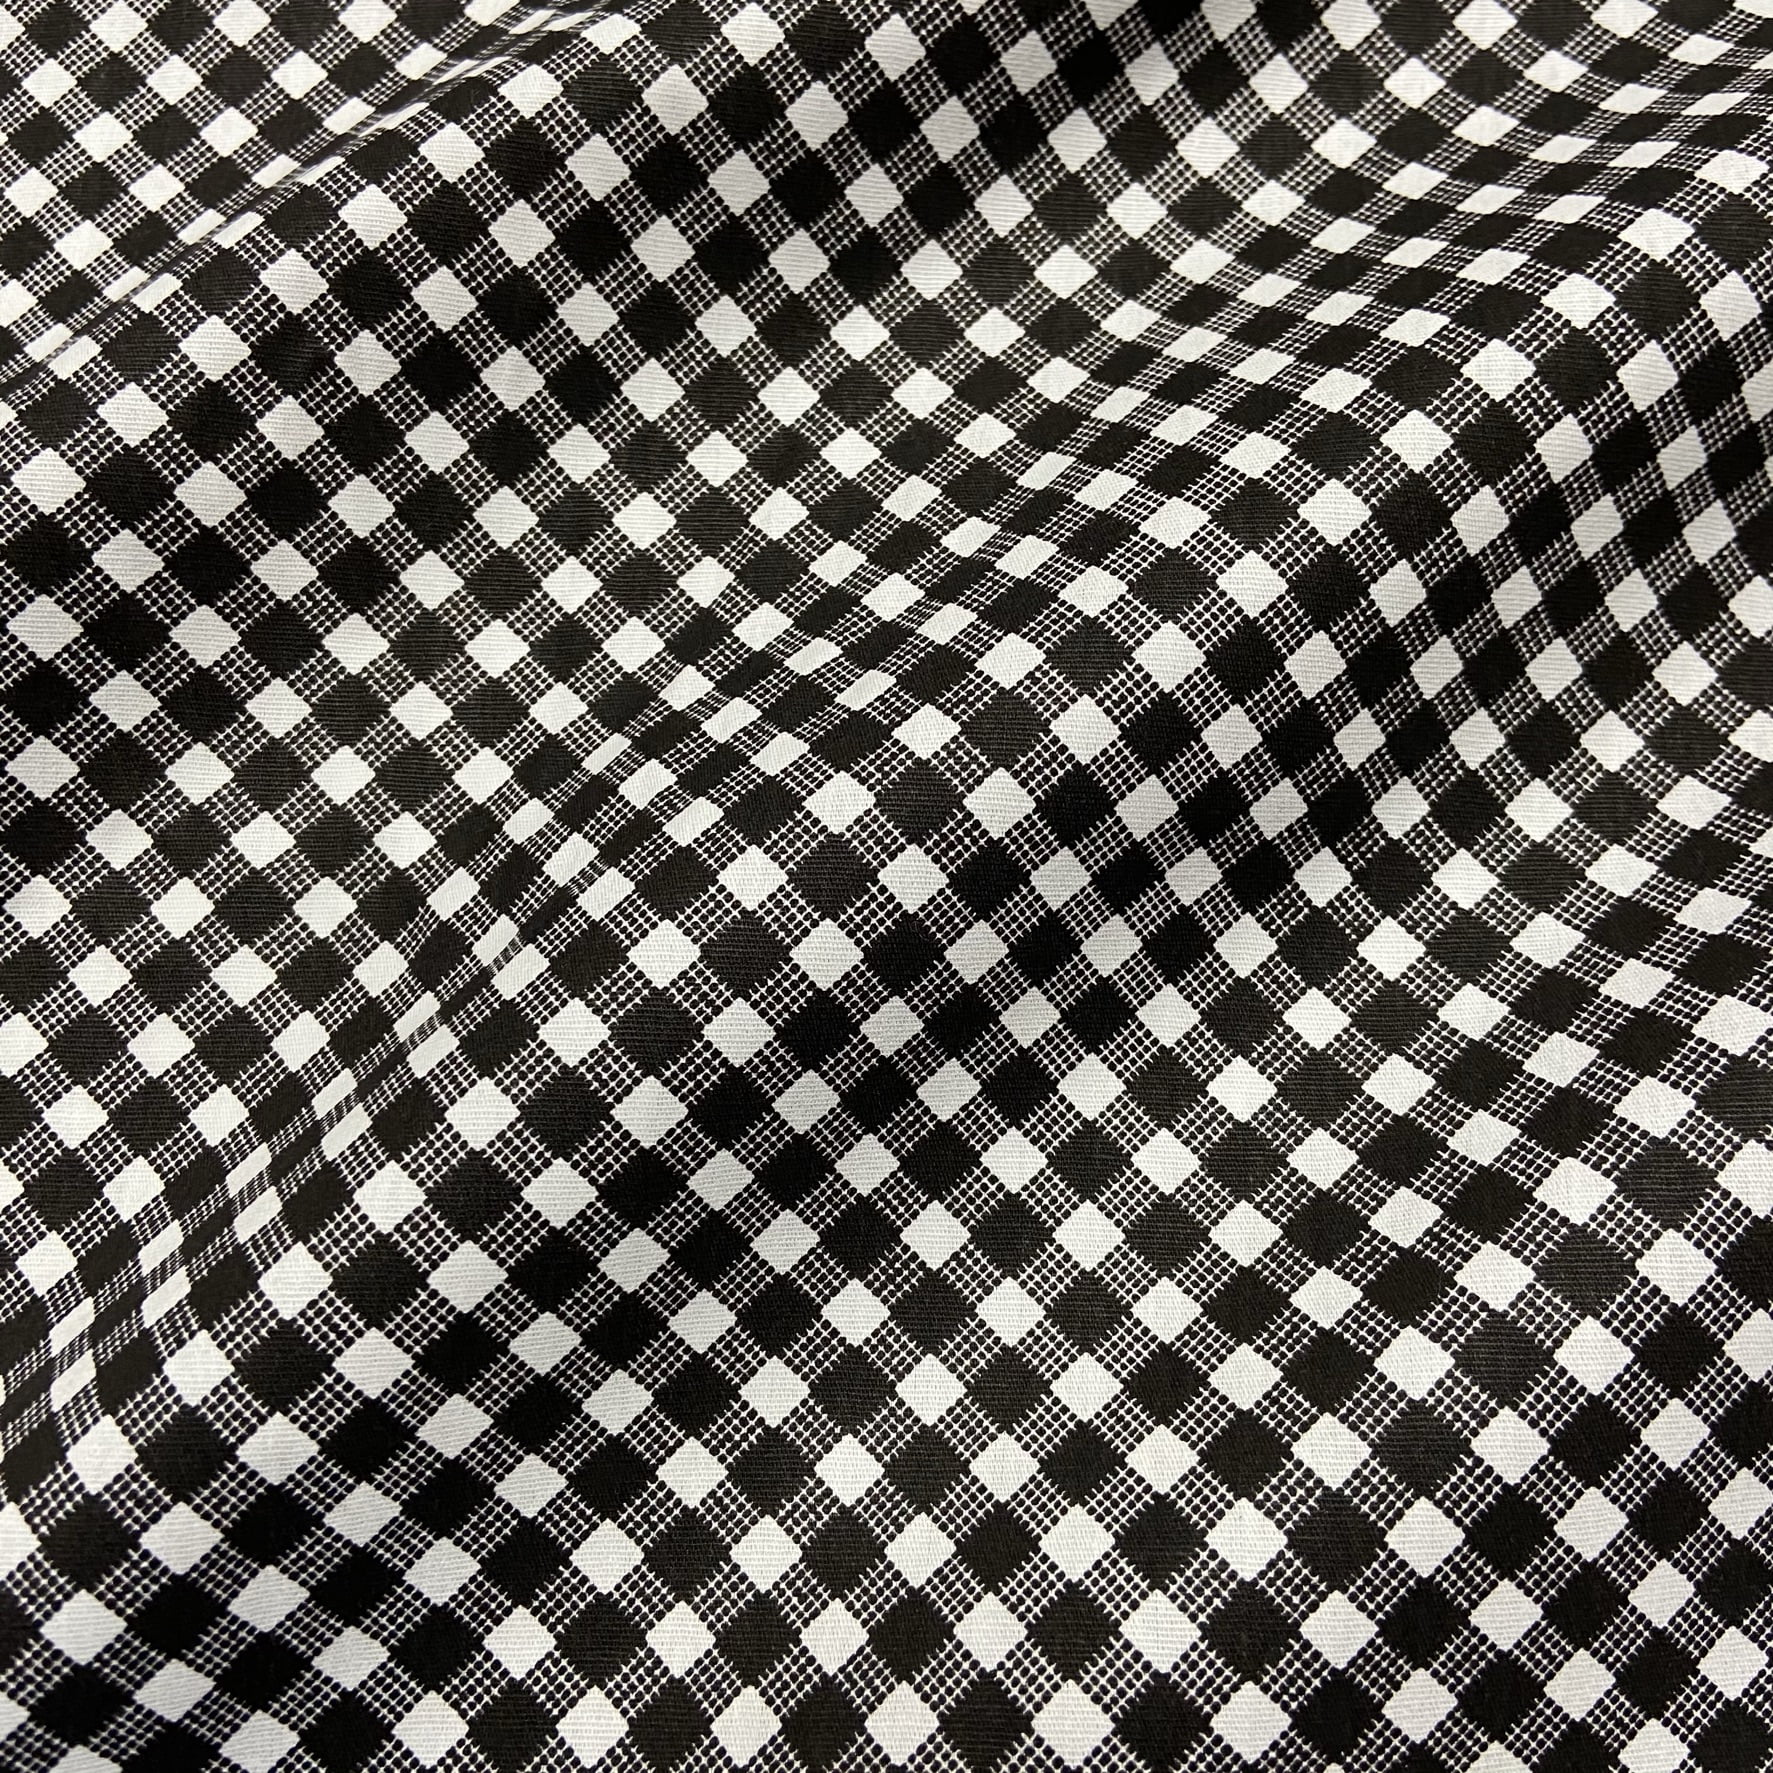 Fundo de tecido xadrez preto e branco clássico